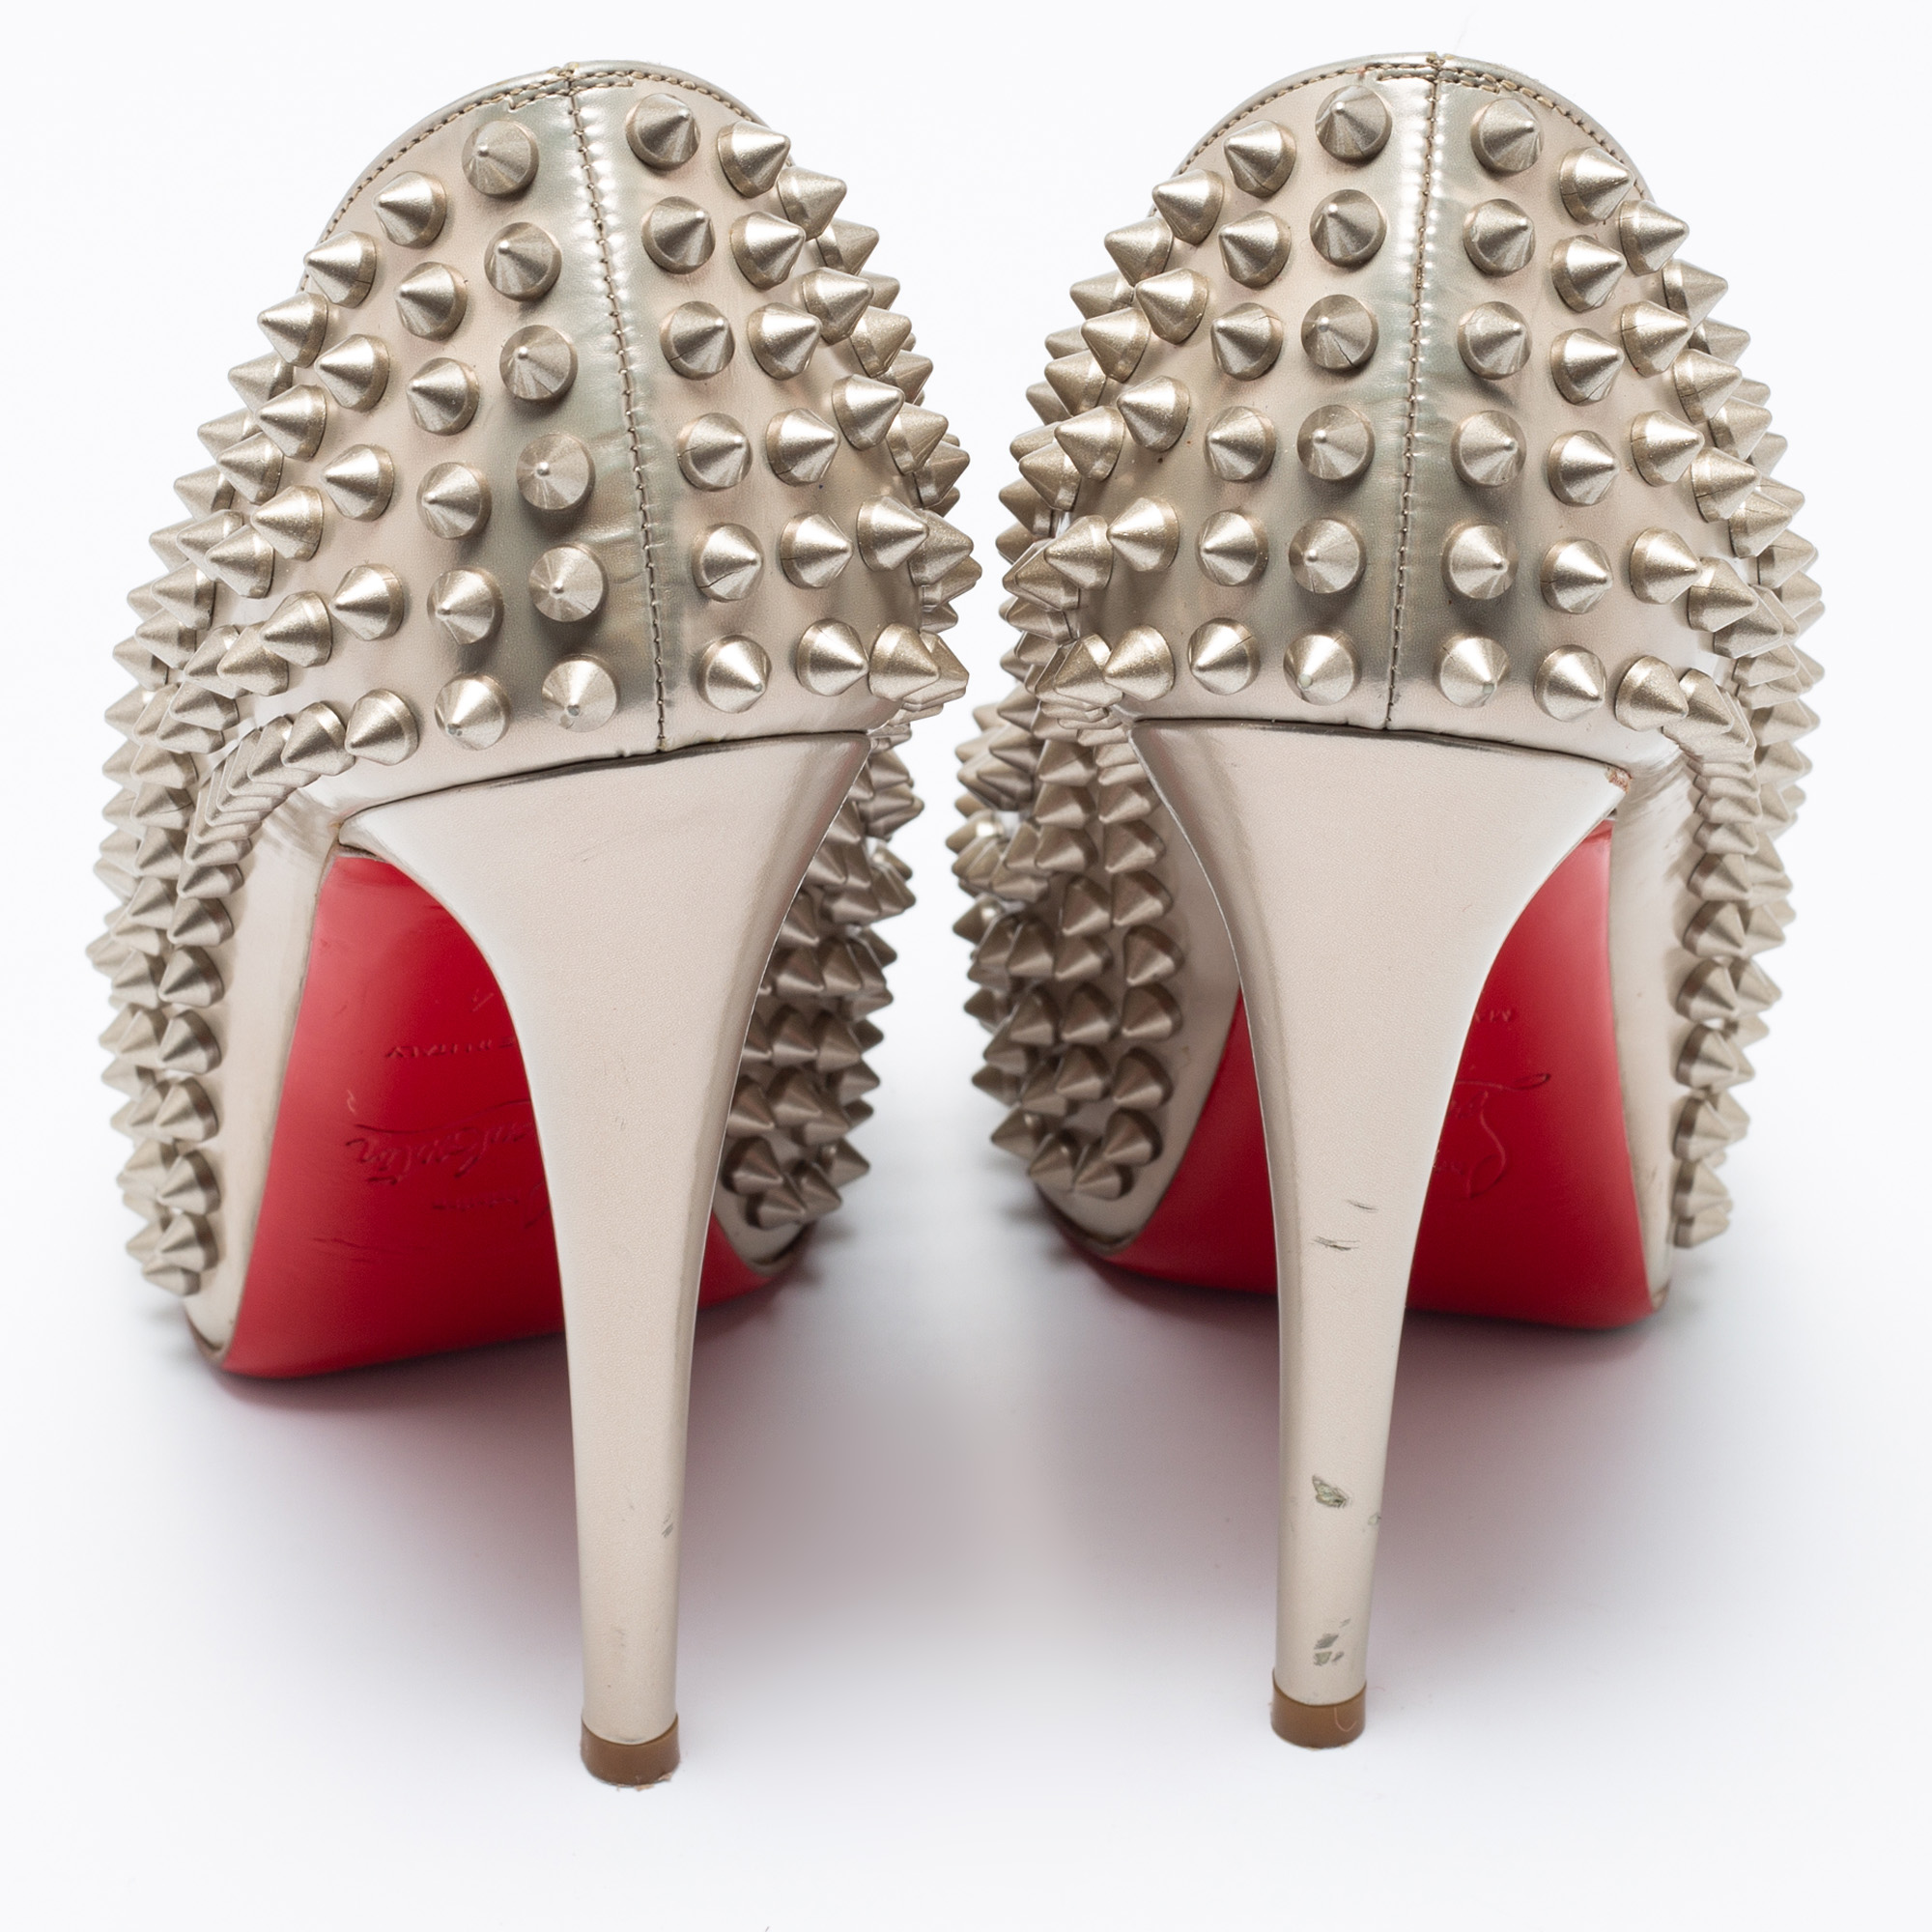 Christian Louboutin Grey Patent Leather Lady Peep Toe Spikes Platform Pumps Size 34